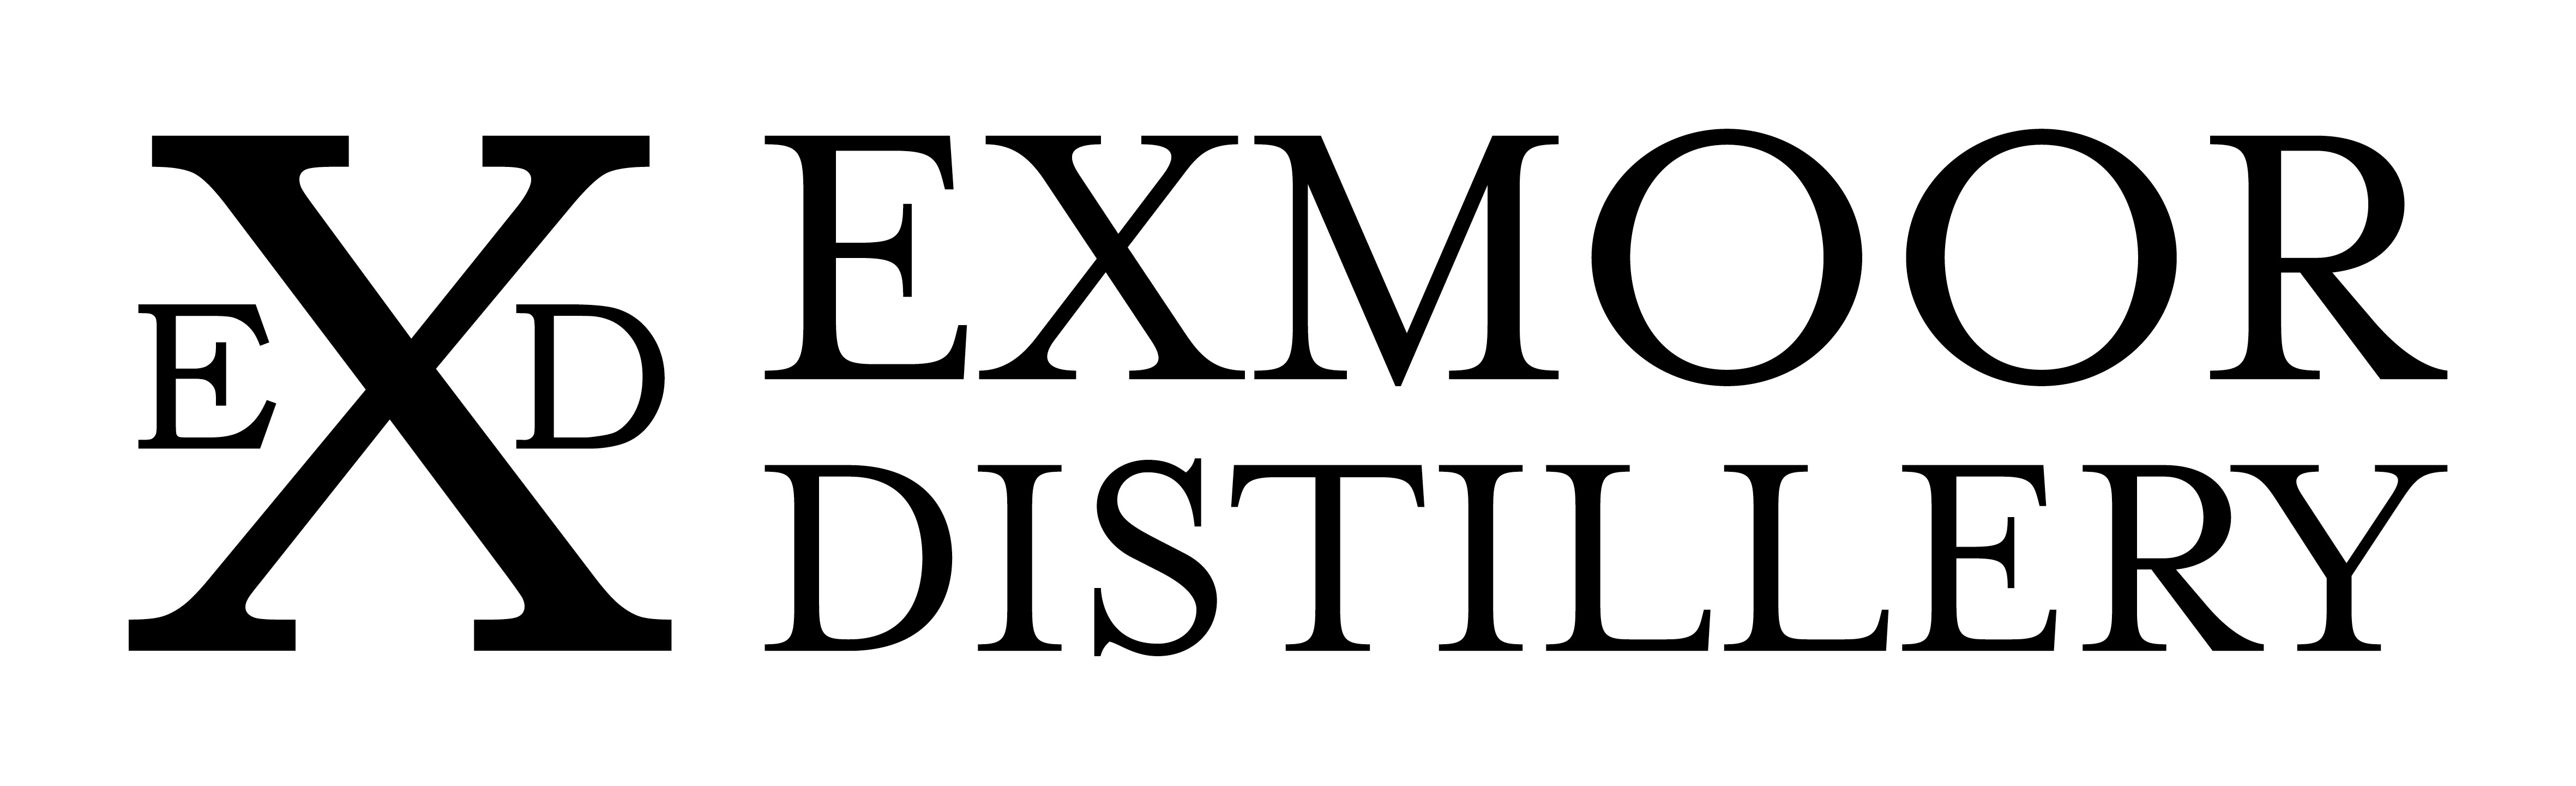 Exmoor Distillery Ltd